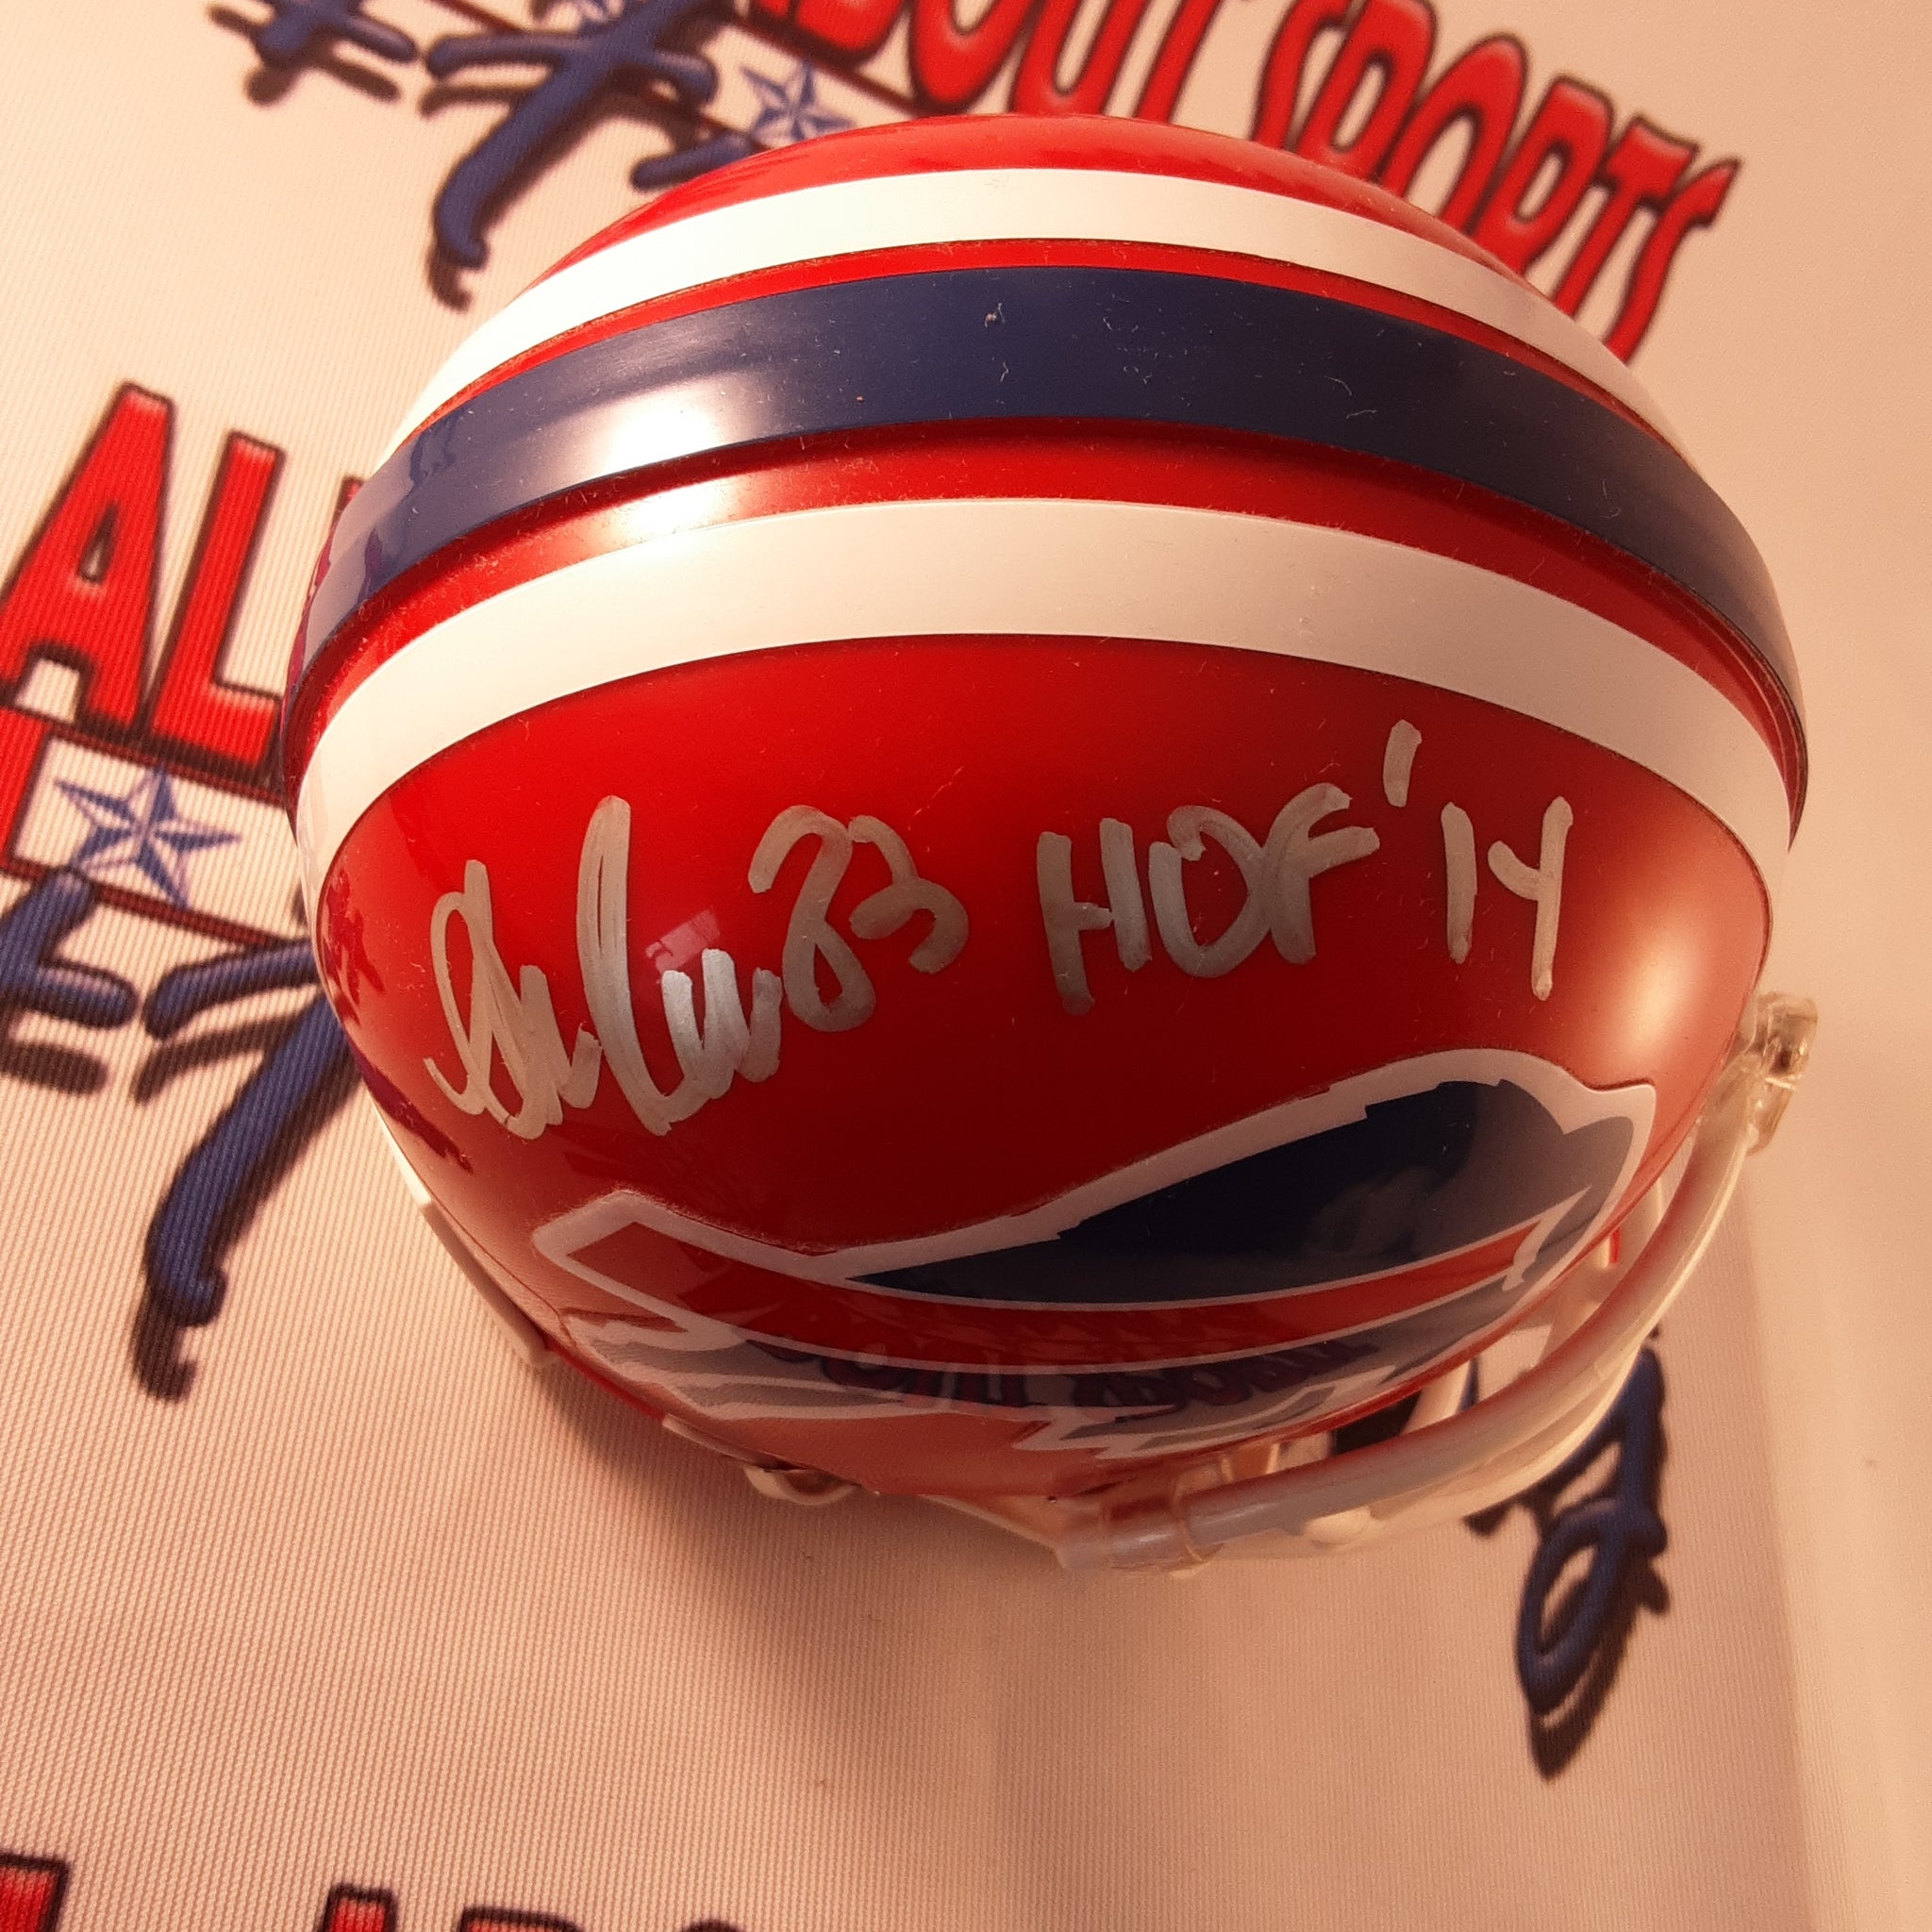 Andre Reed Authentic Signed Autographed Mini Helmet JSA.